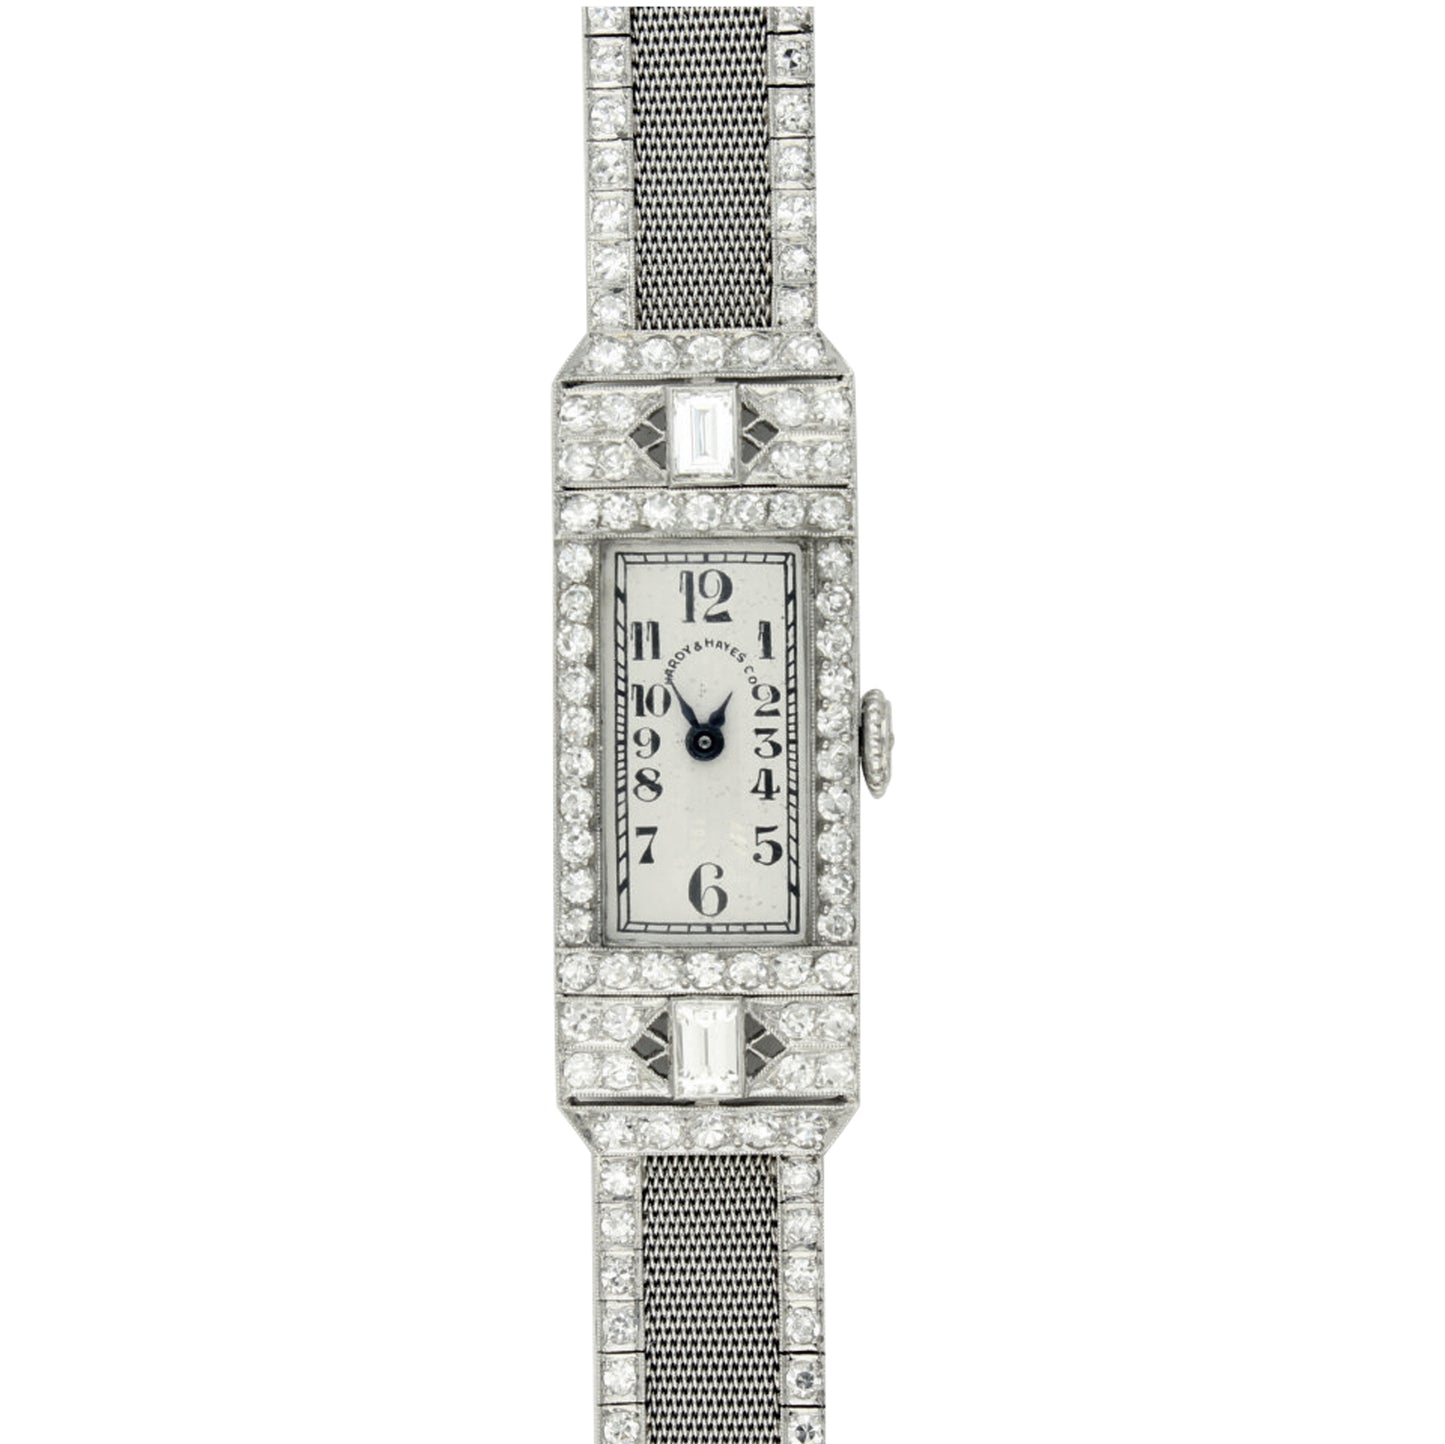 Platinum and diamond set bracelet watch. Made 1930's